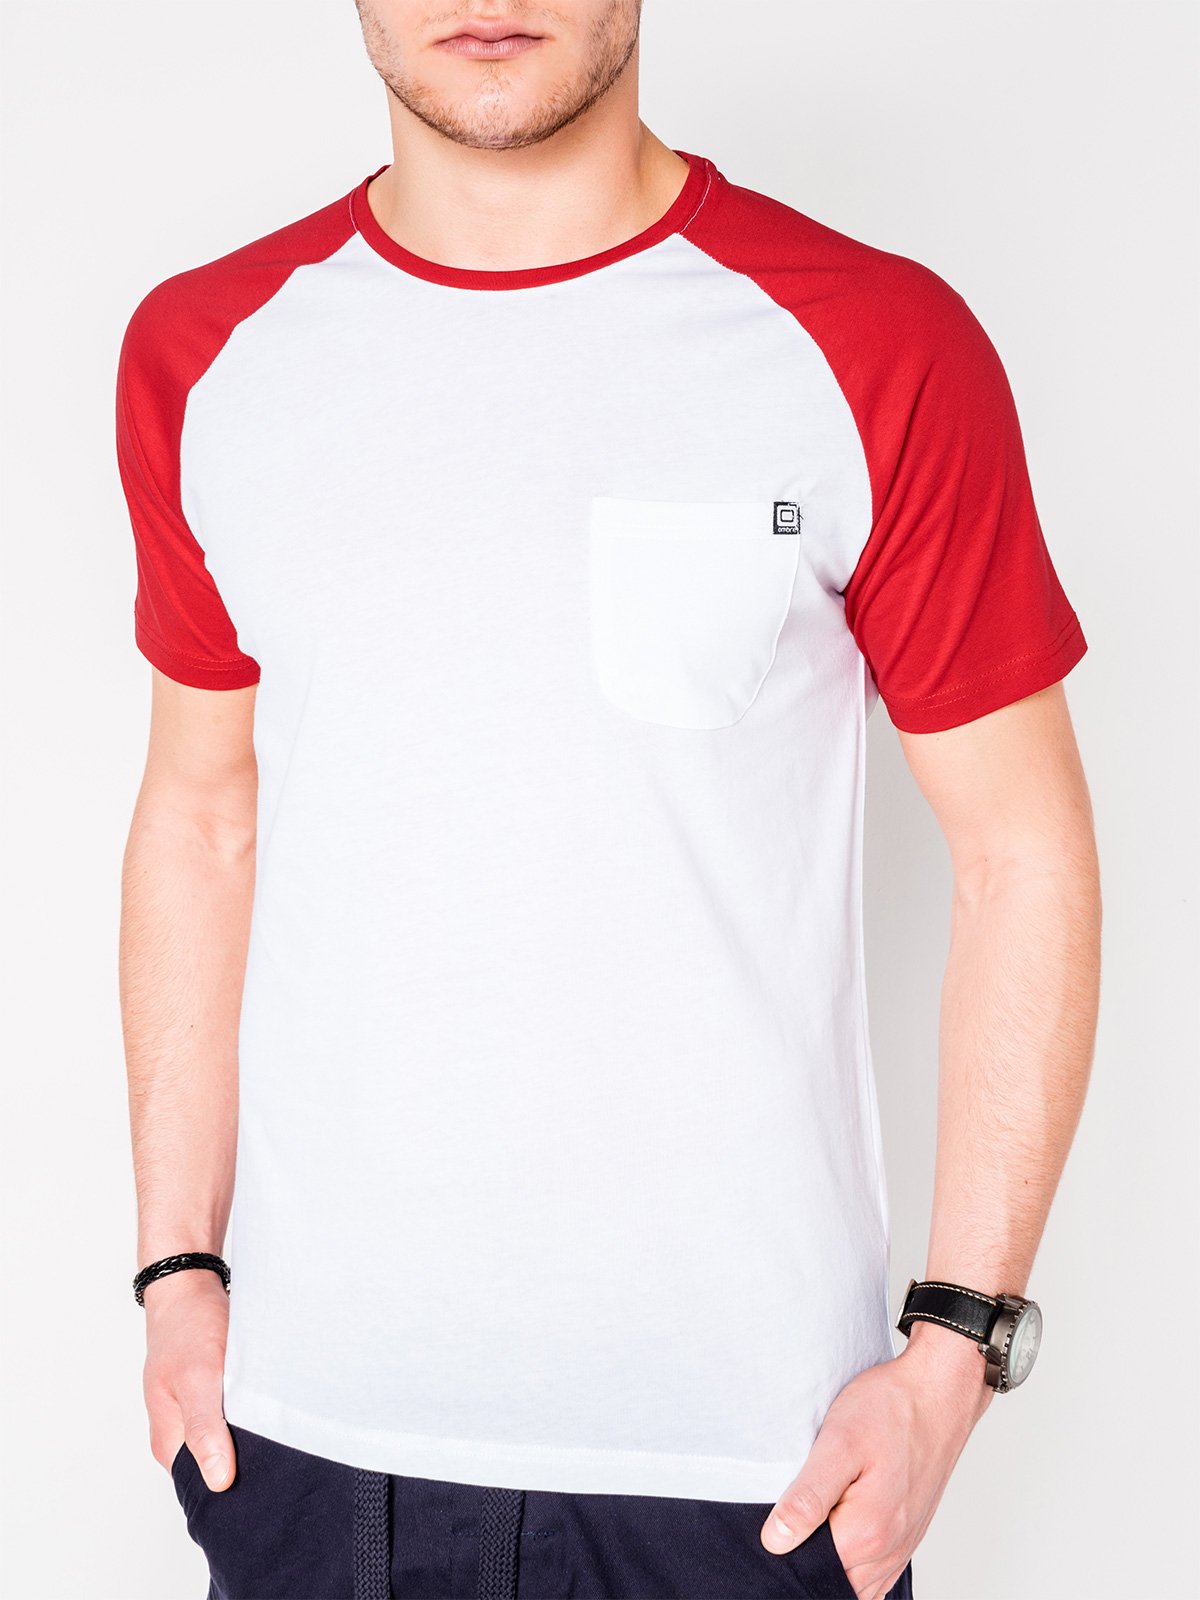 Men's plain t-shirt S1015 - white/red | MODONE wholesale - Clothing For Men